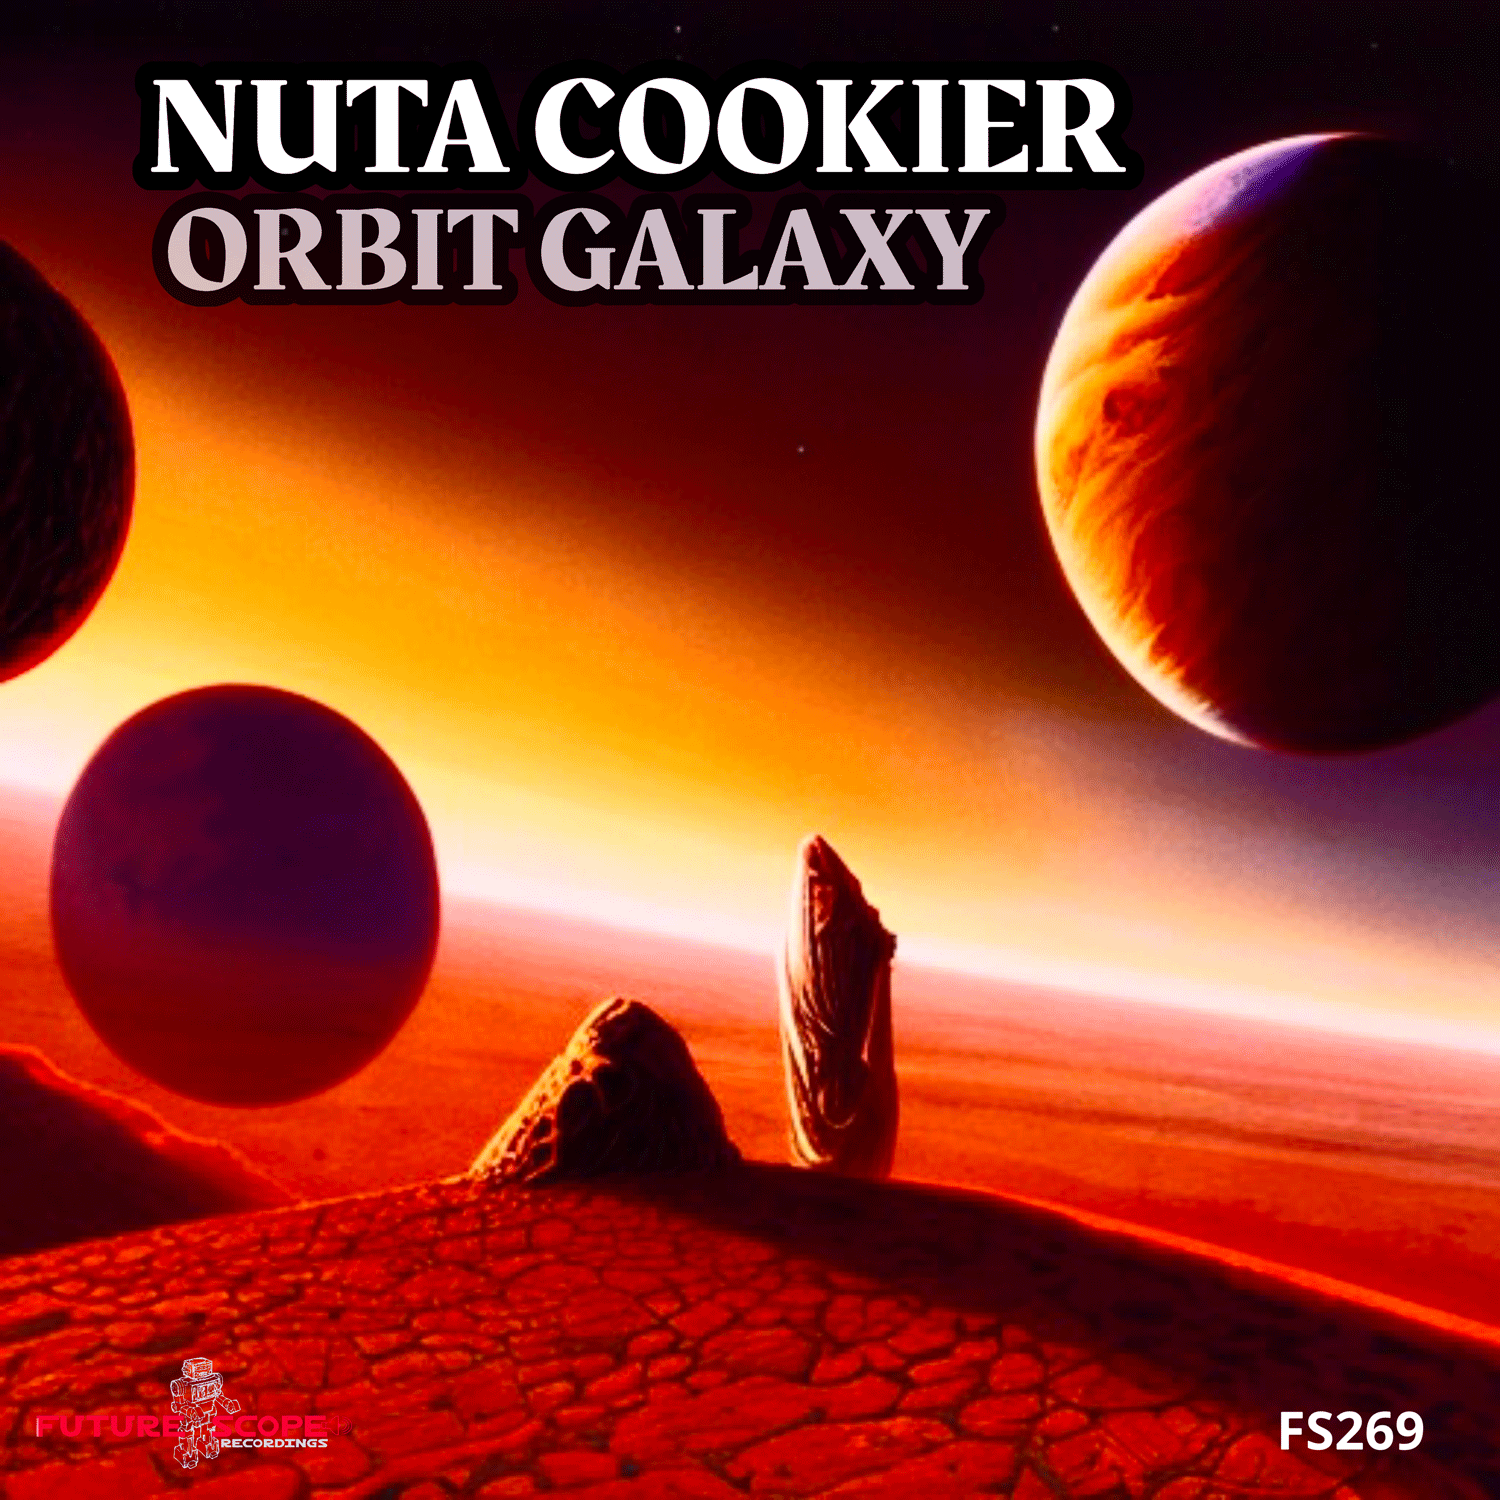 Nuta Cookier presents a pulsating Techno EP titled "Orbit Galaxy"